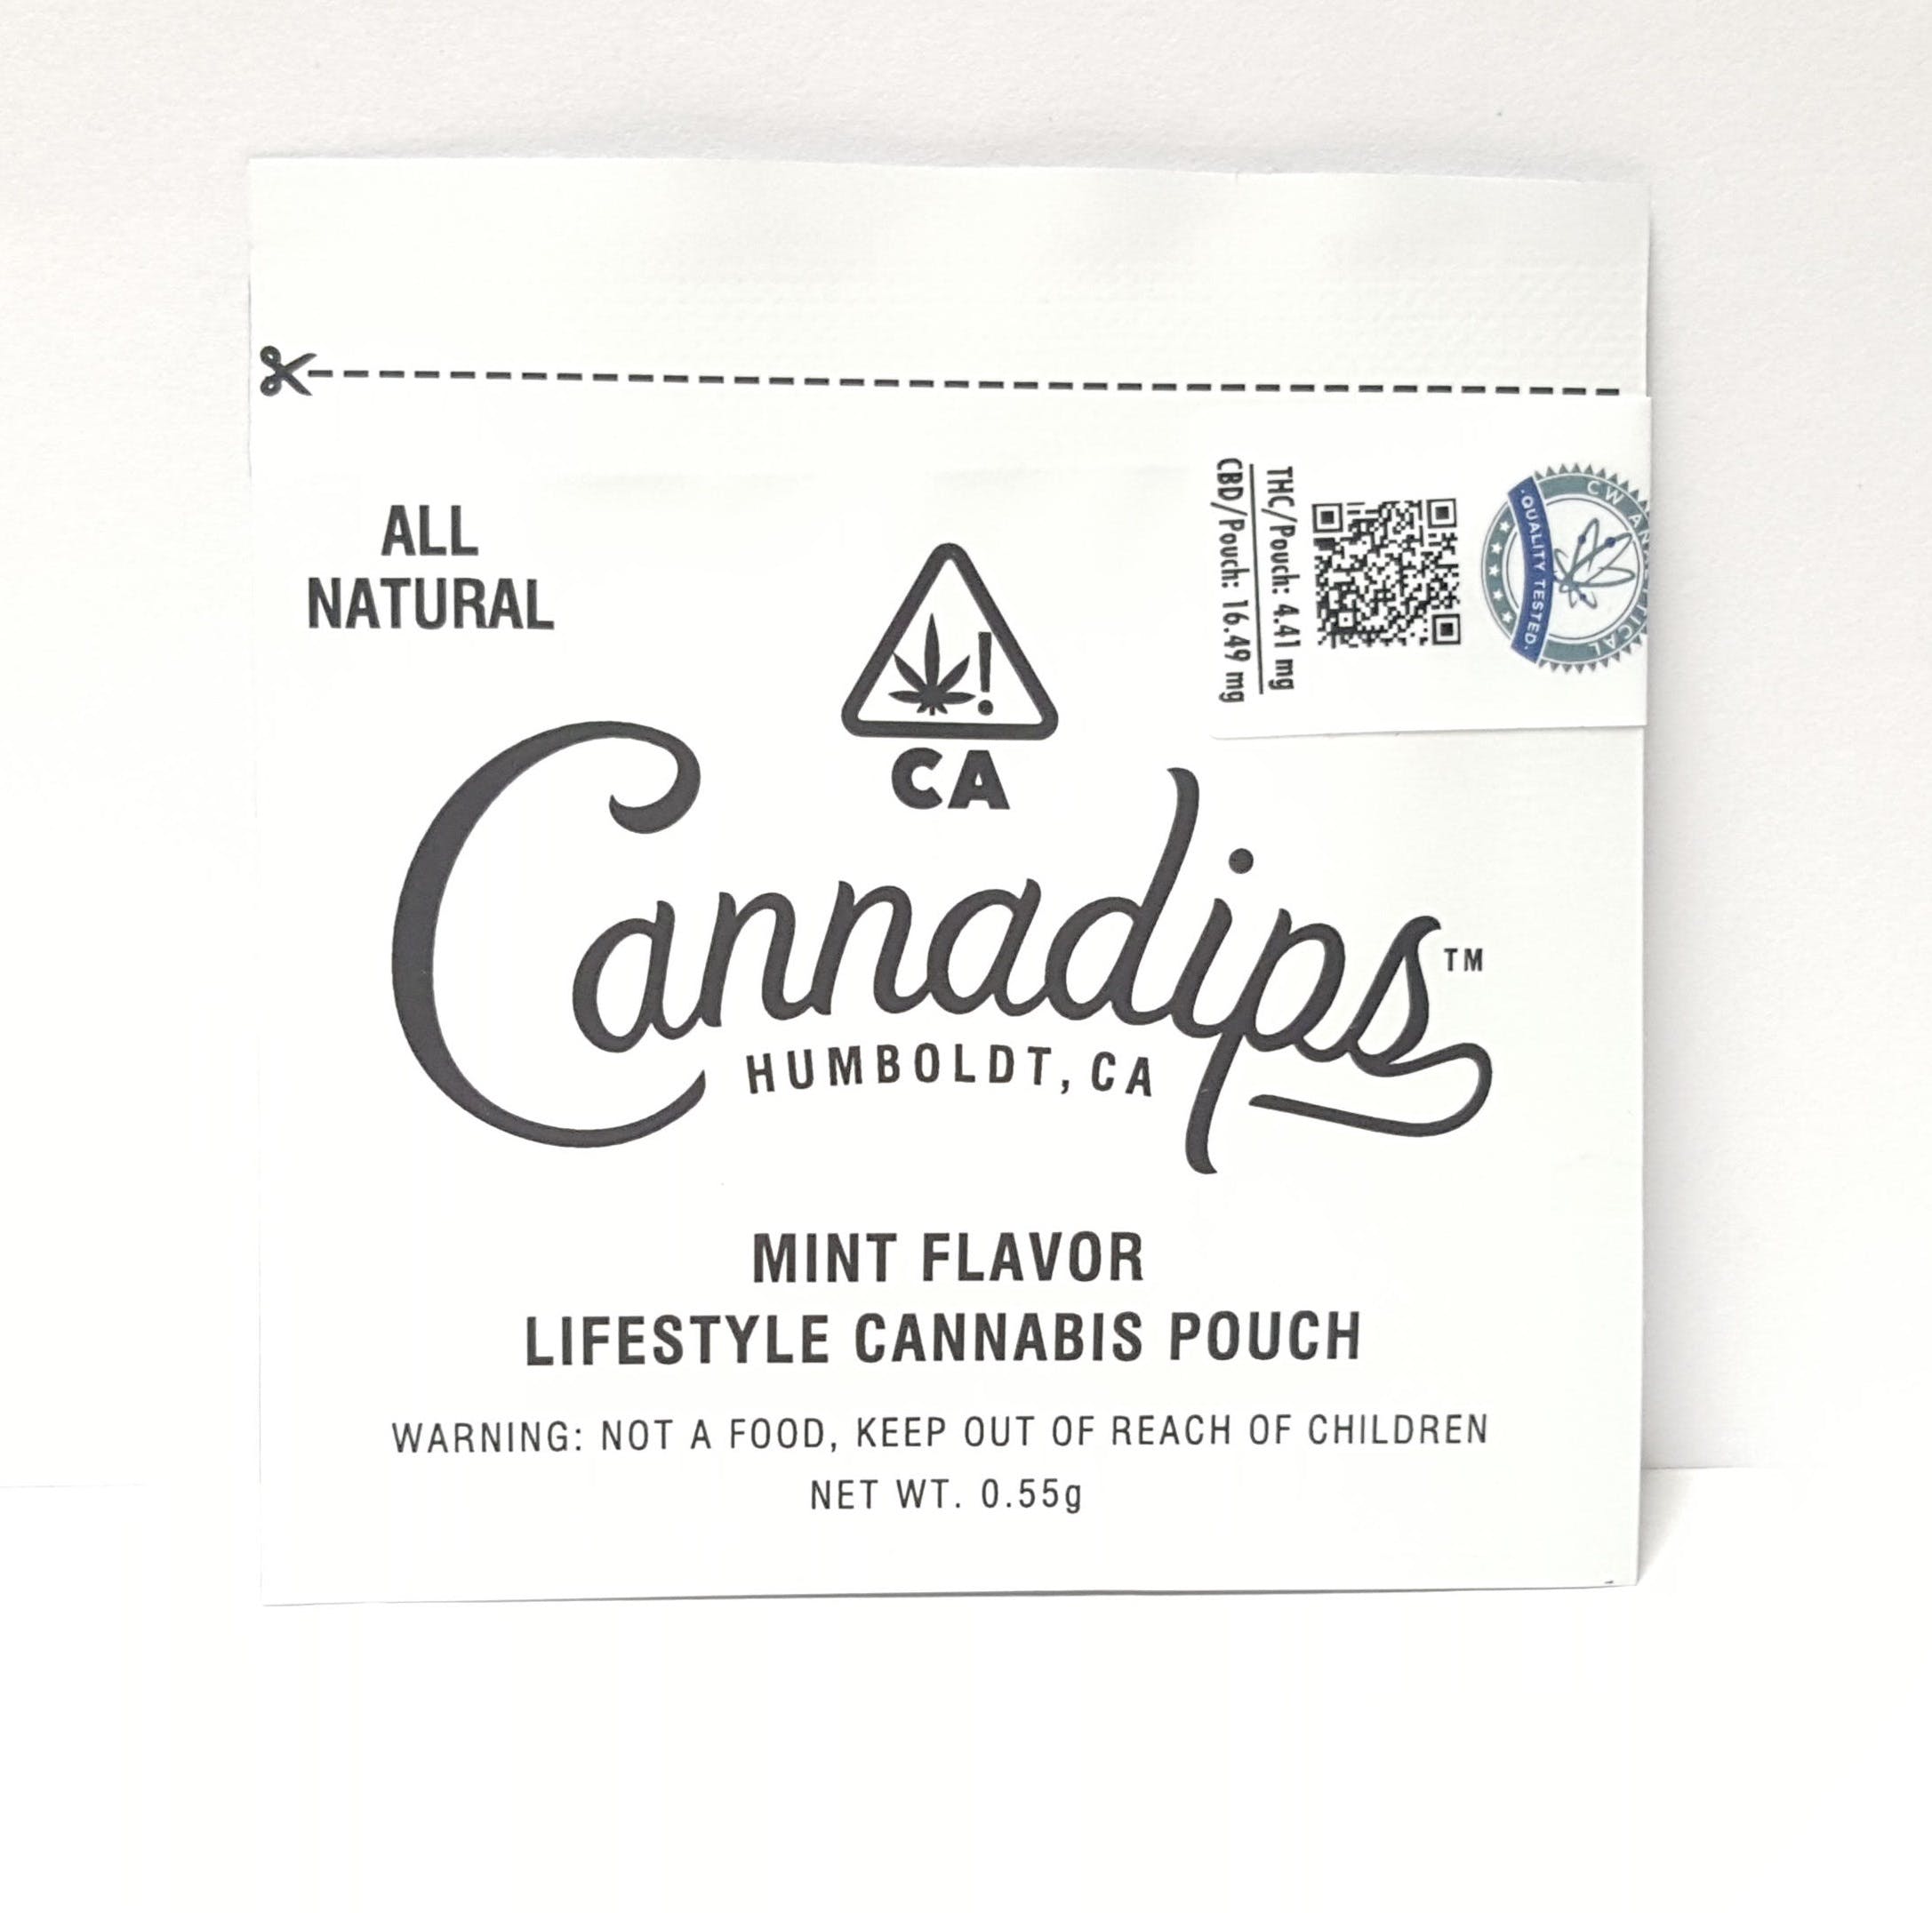 edible-cannadips-mint-flavor-lifestyle-single-cannabis-pouch